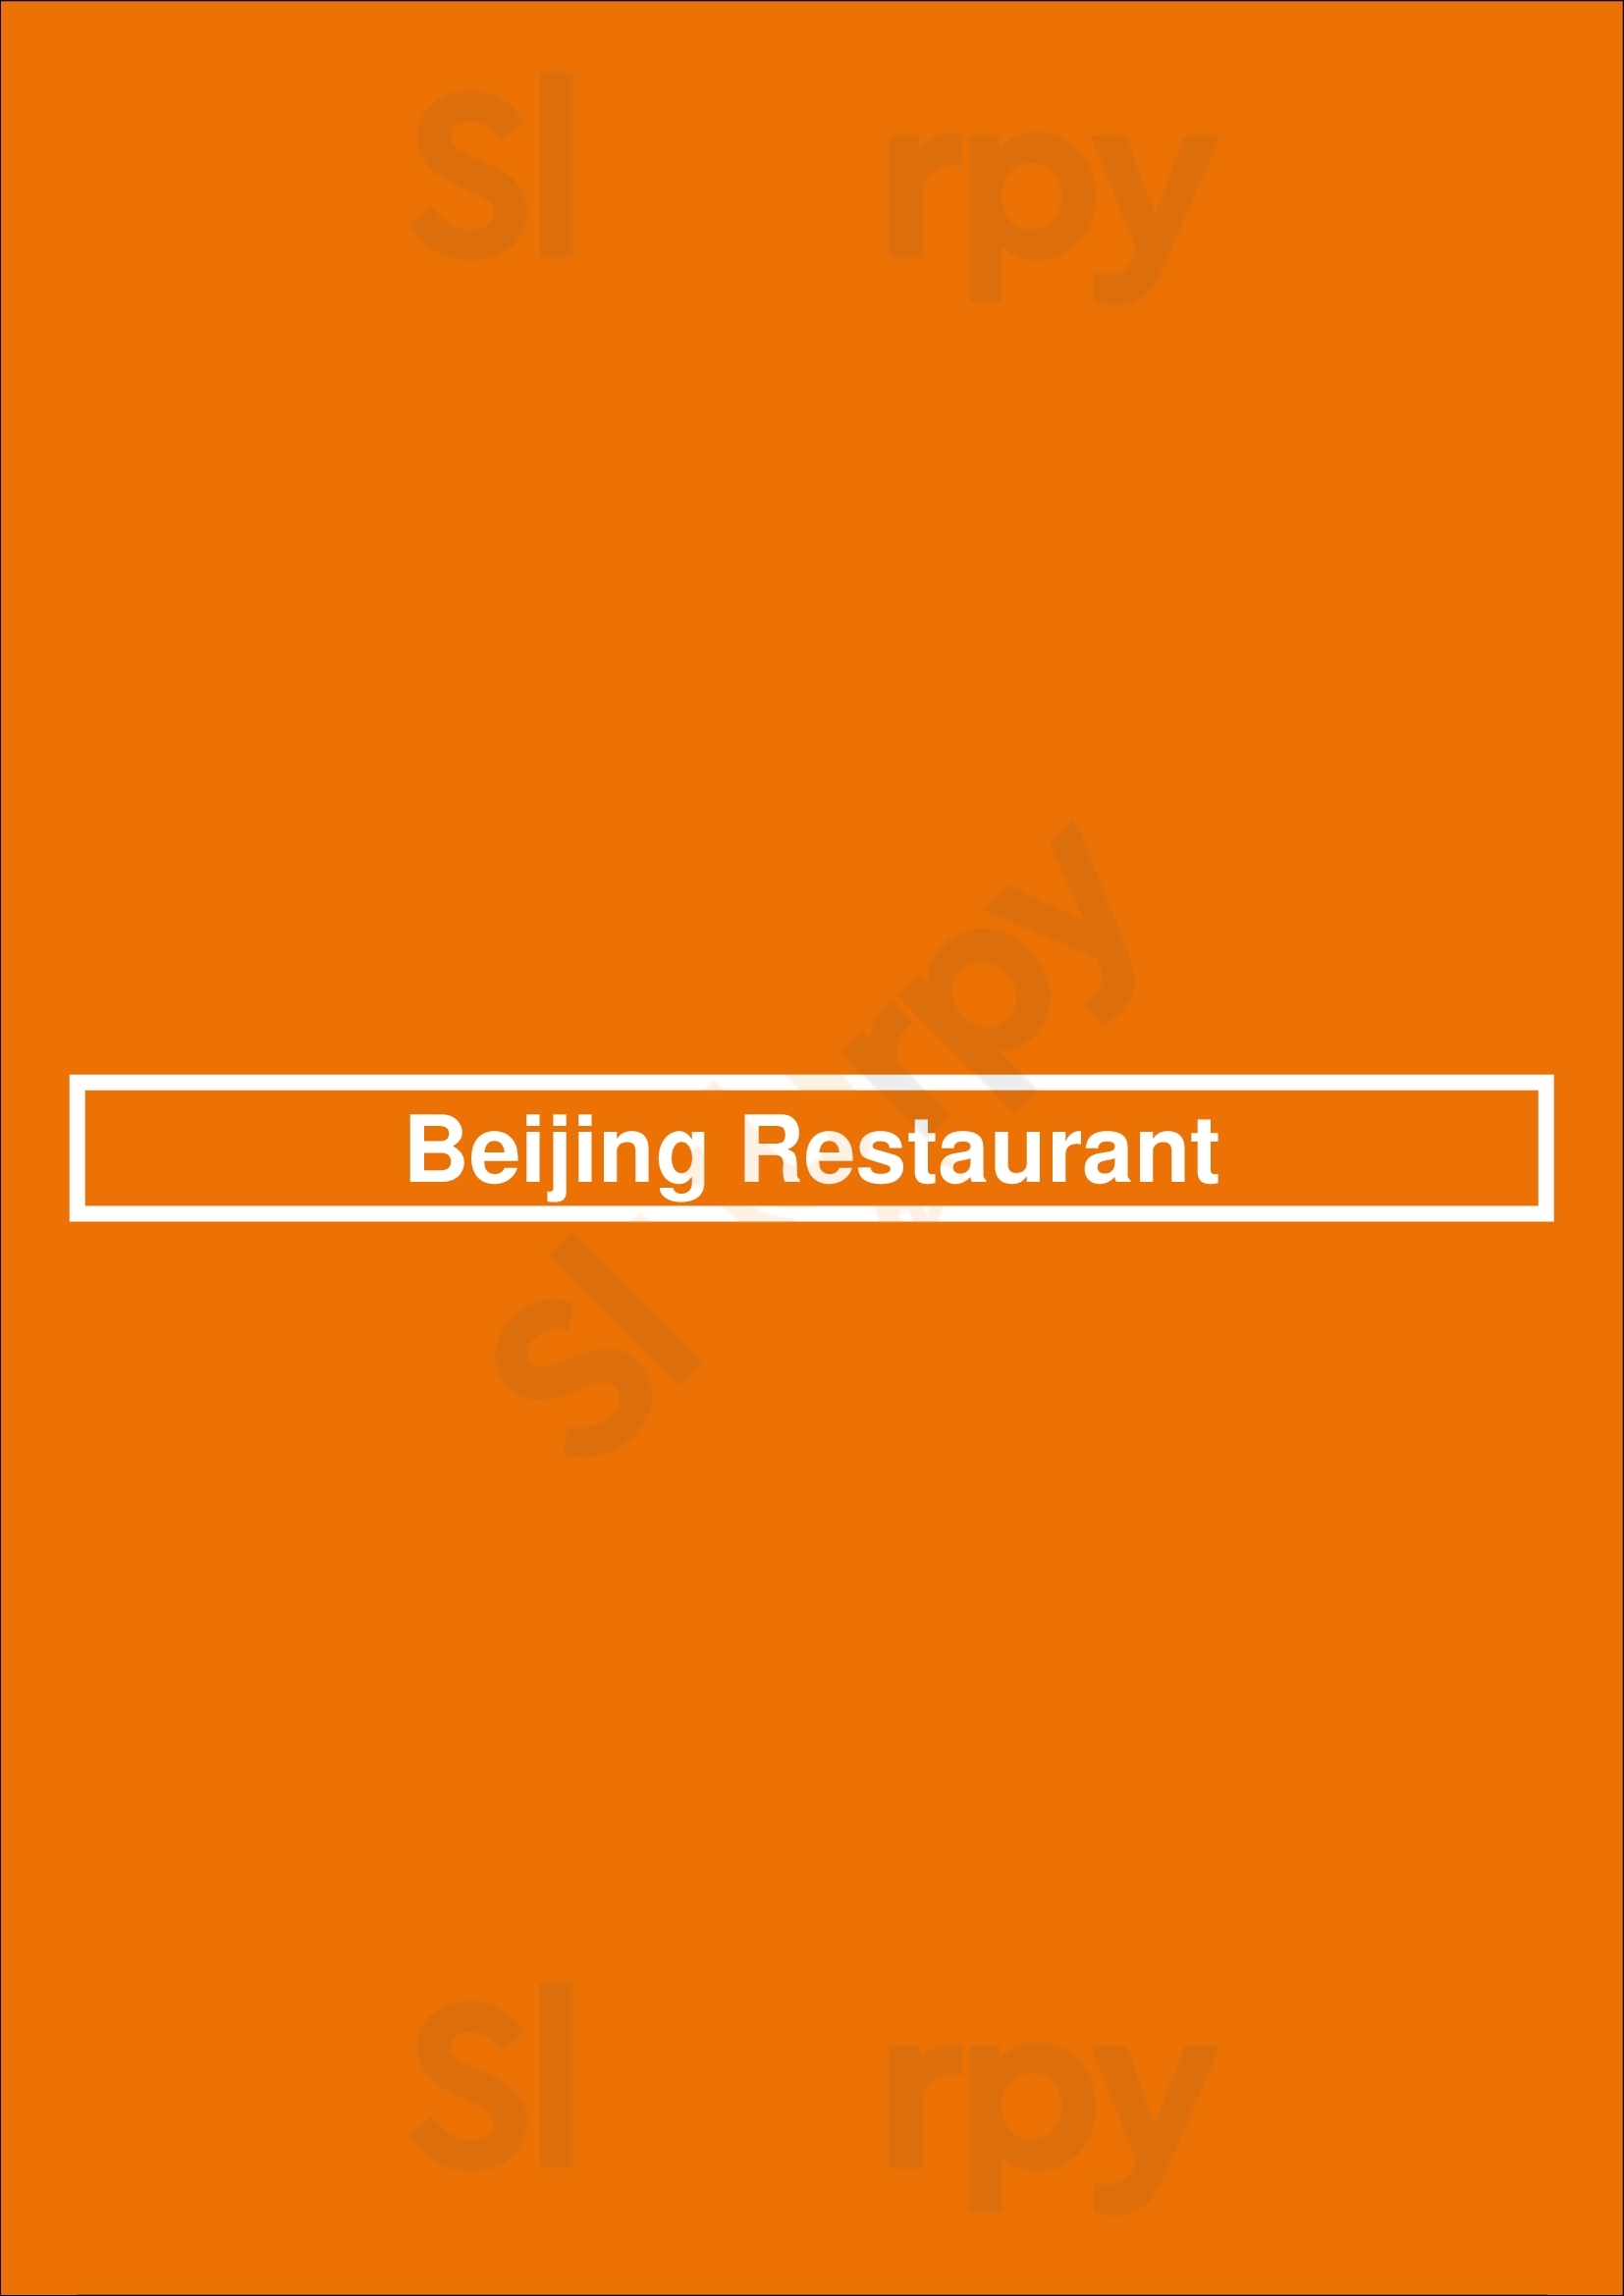 Beijing Restaurant San Francisco Menu - 1